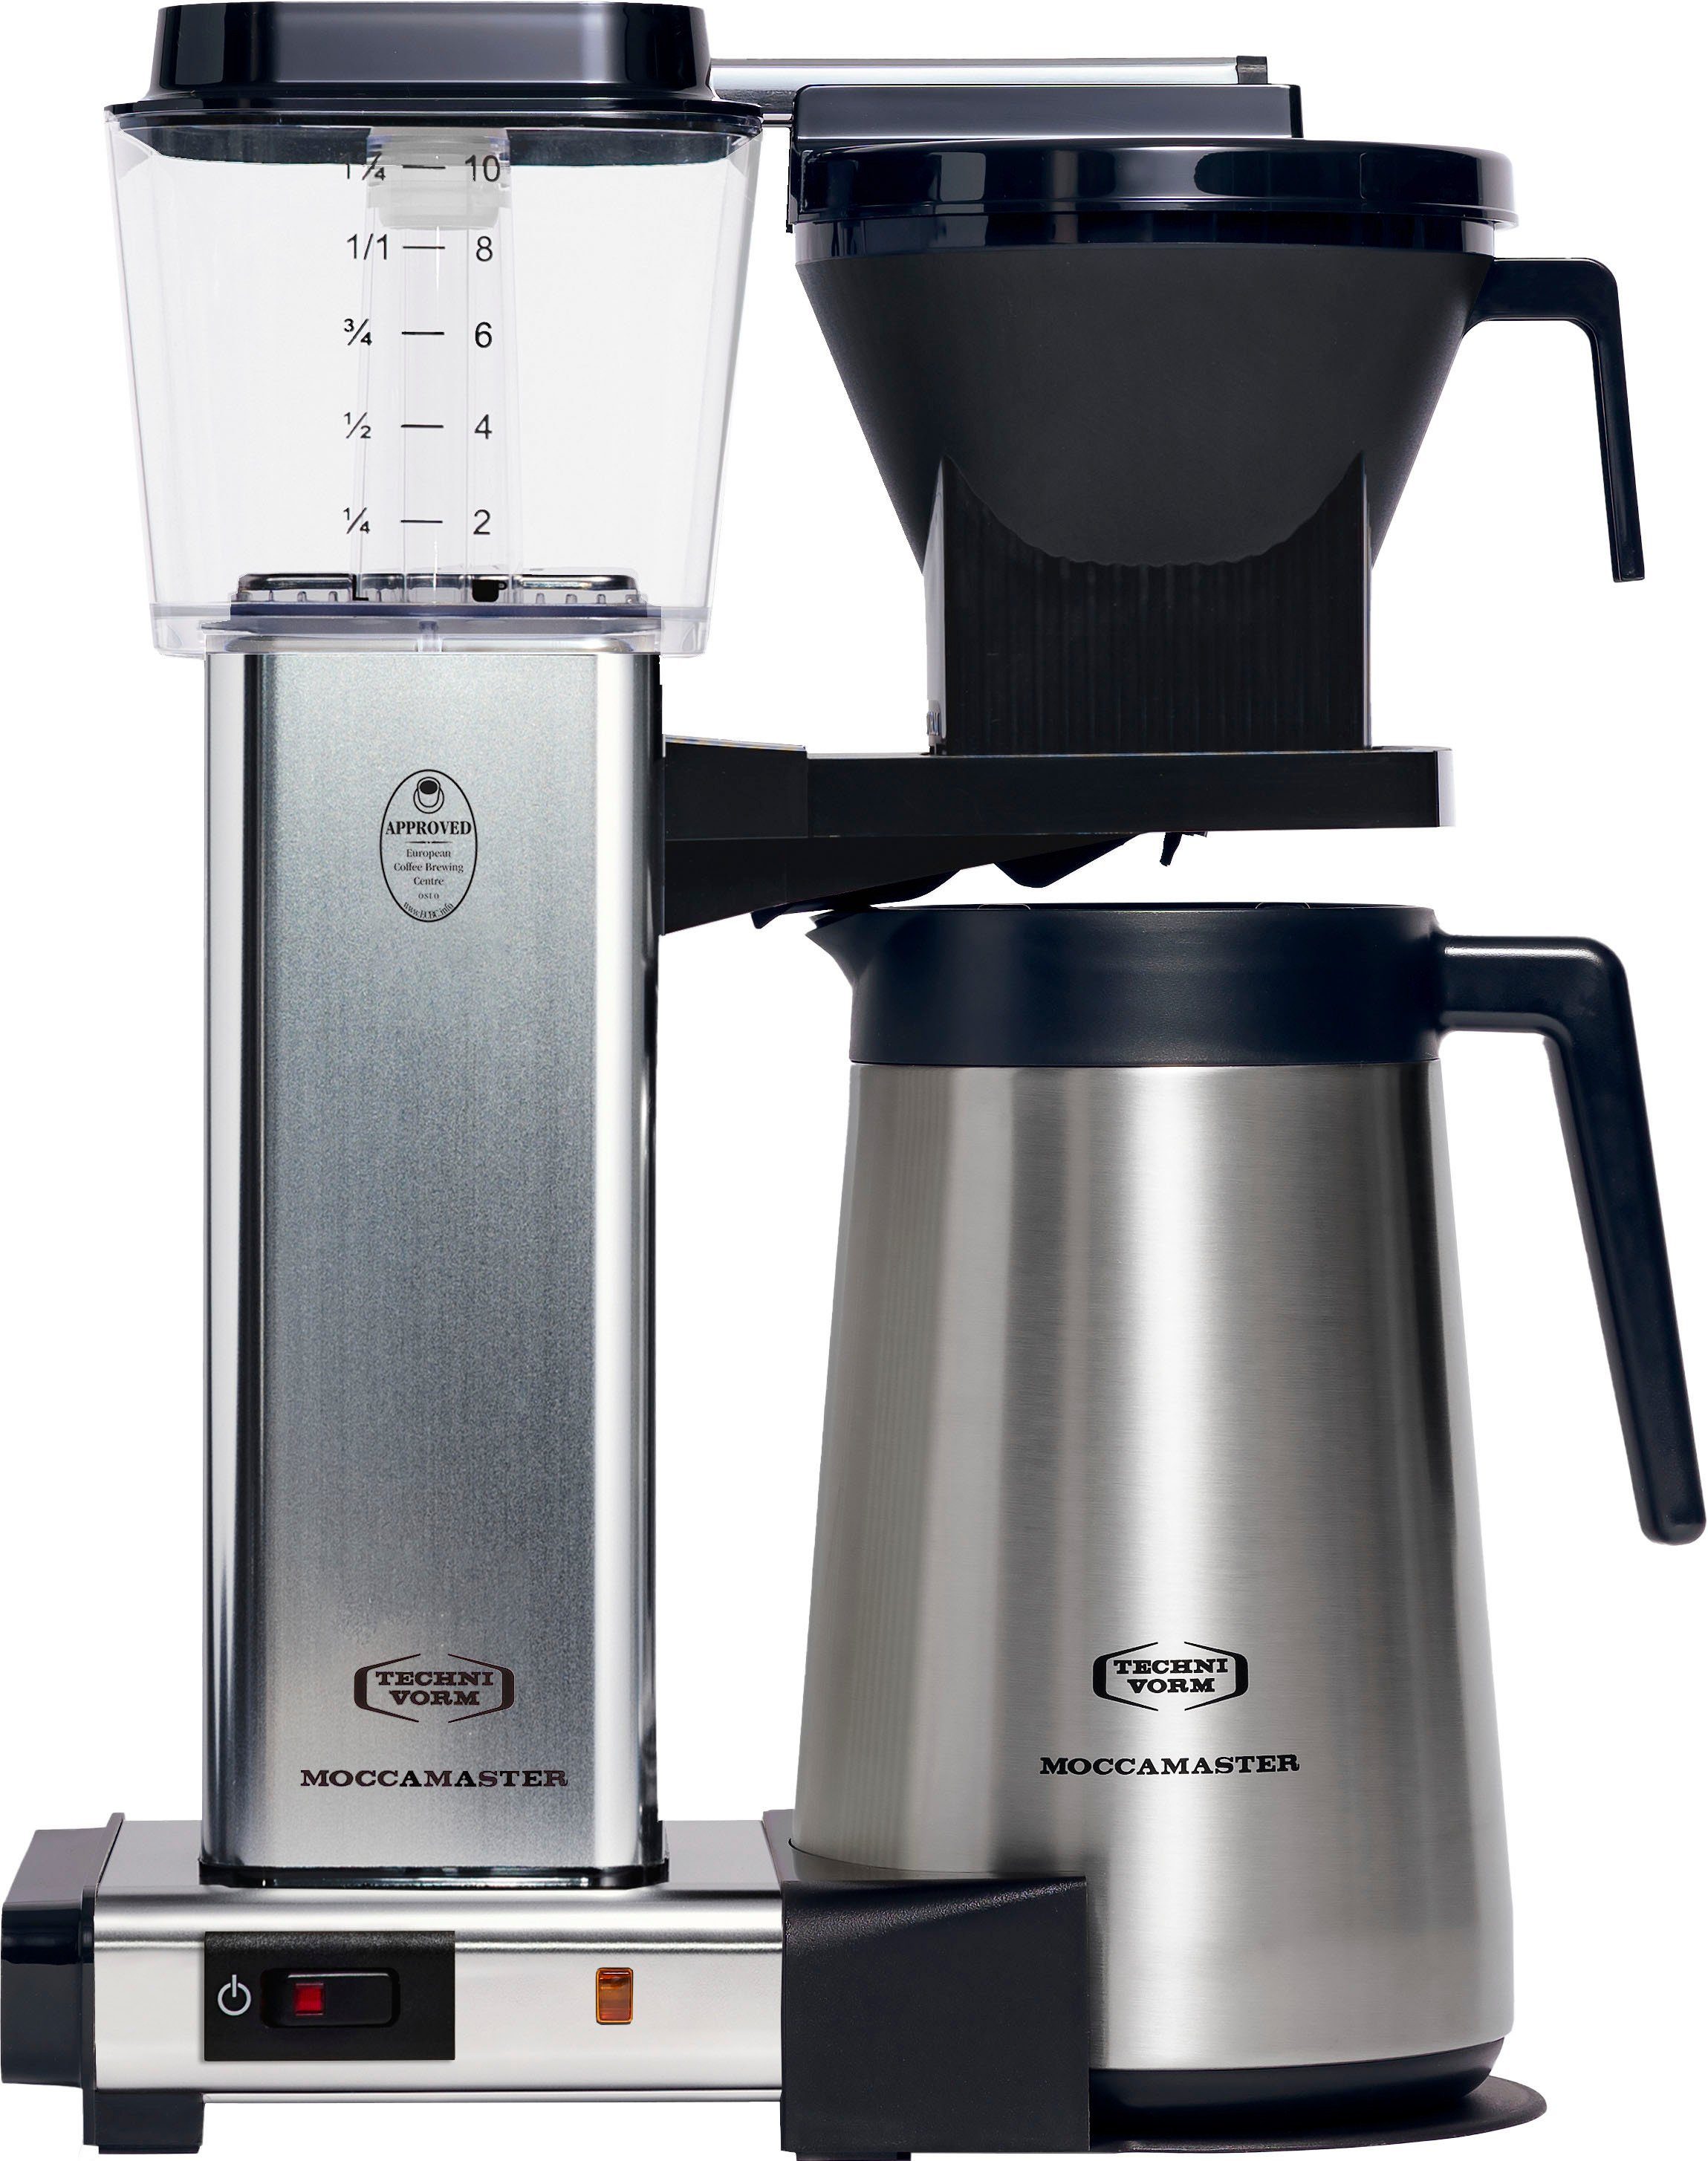 Moccamaster Filterkaffeemaschine mit Thermoskanne KBGT 741 polished, 1,25l Kaffeekanne, Papierfilter 1x4 | Filterkaffeemaschinen